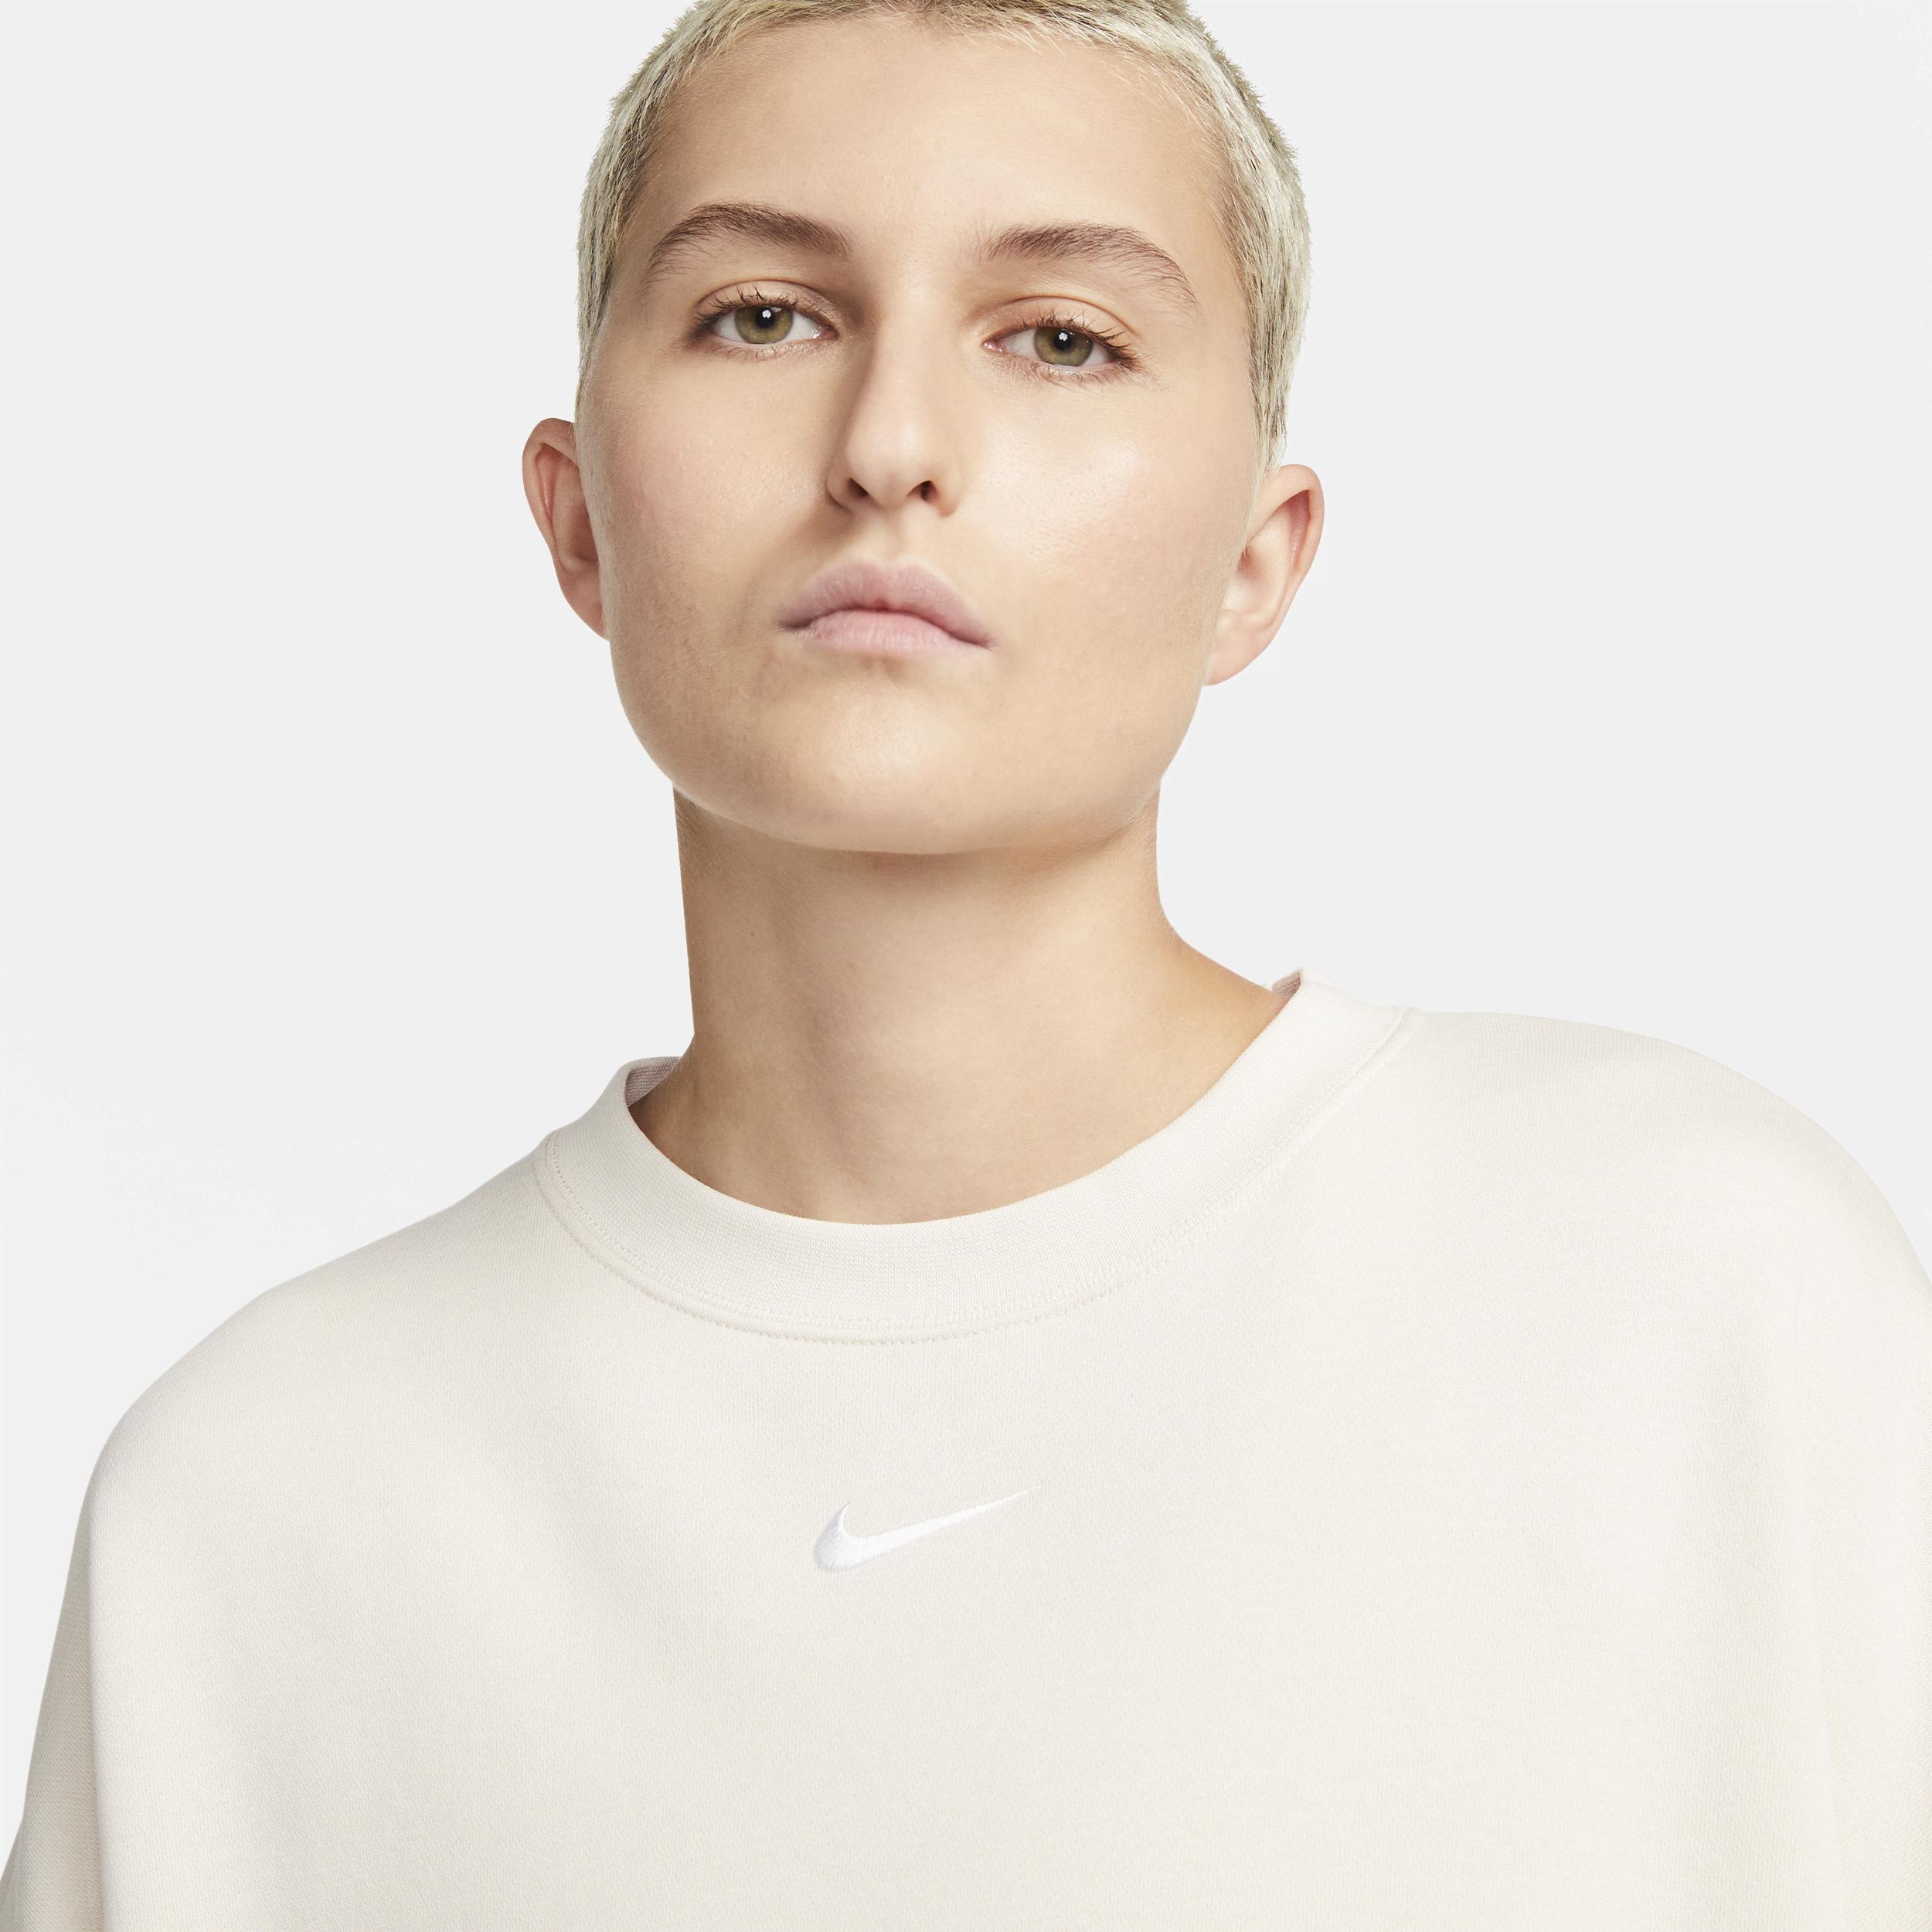 Nike Sportswear Collection Essentials Over-oversized Fleece Crew Sweatshirt  in White | Lyst